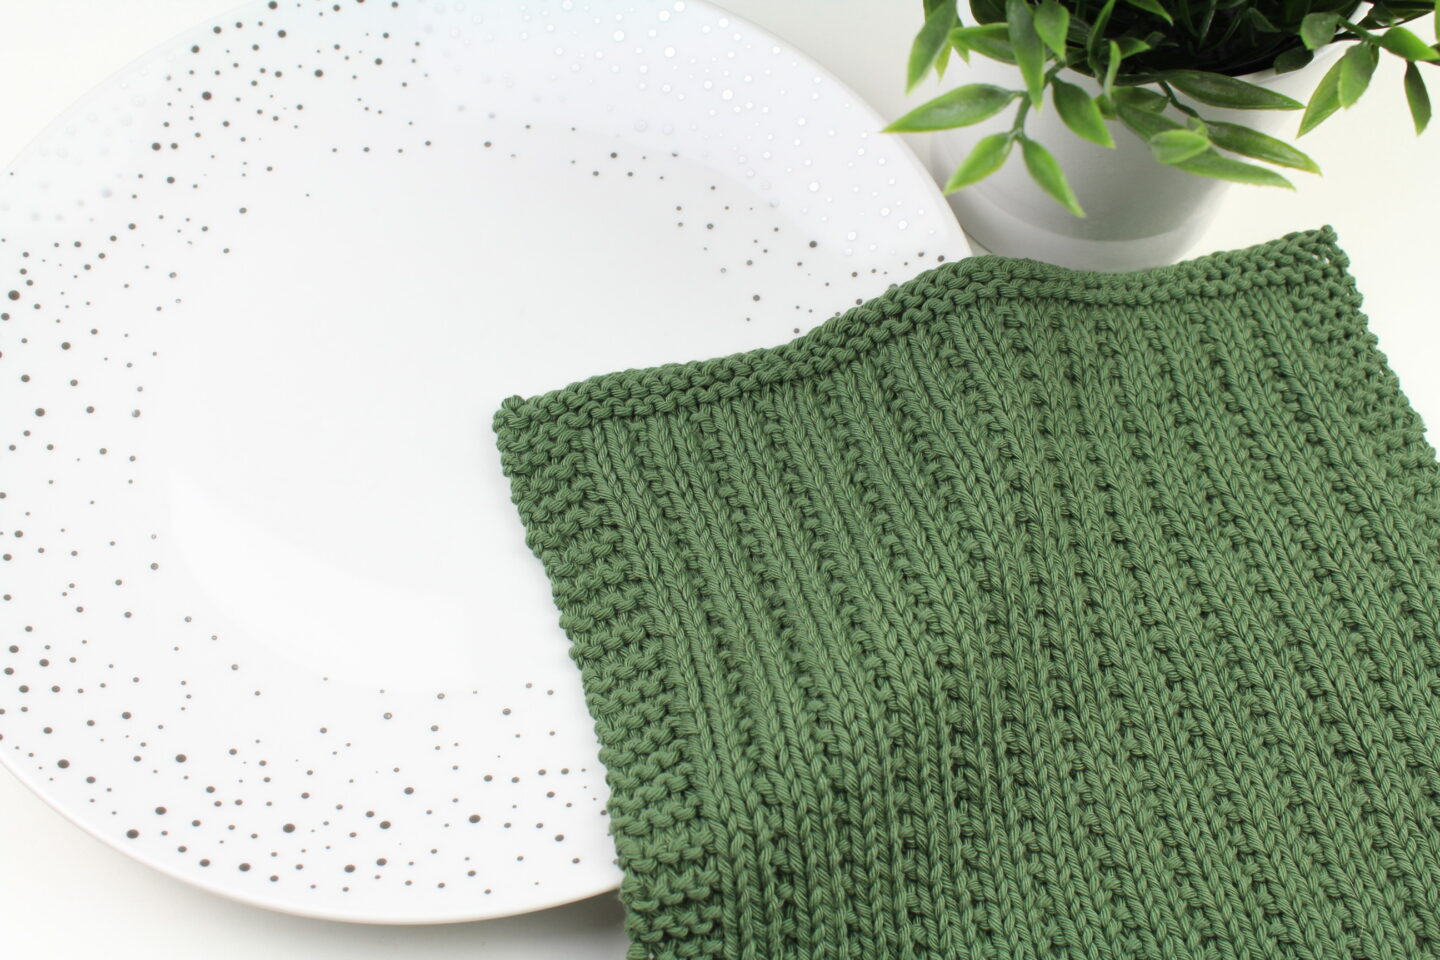 Cove Dishcloth - Free Knitting Pattern